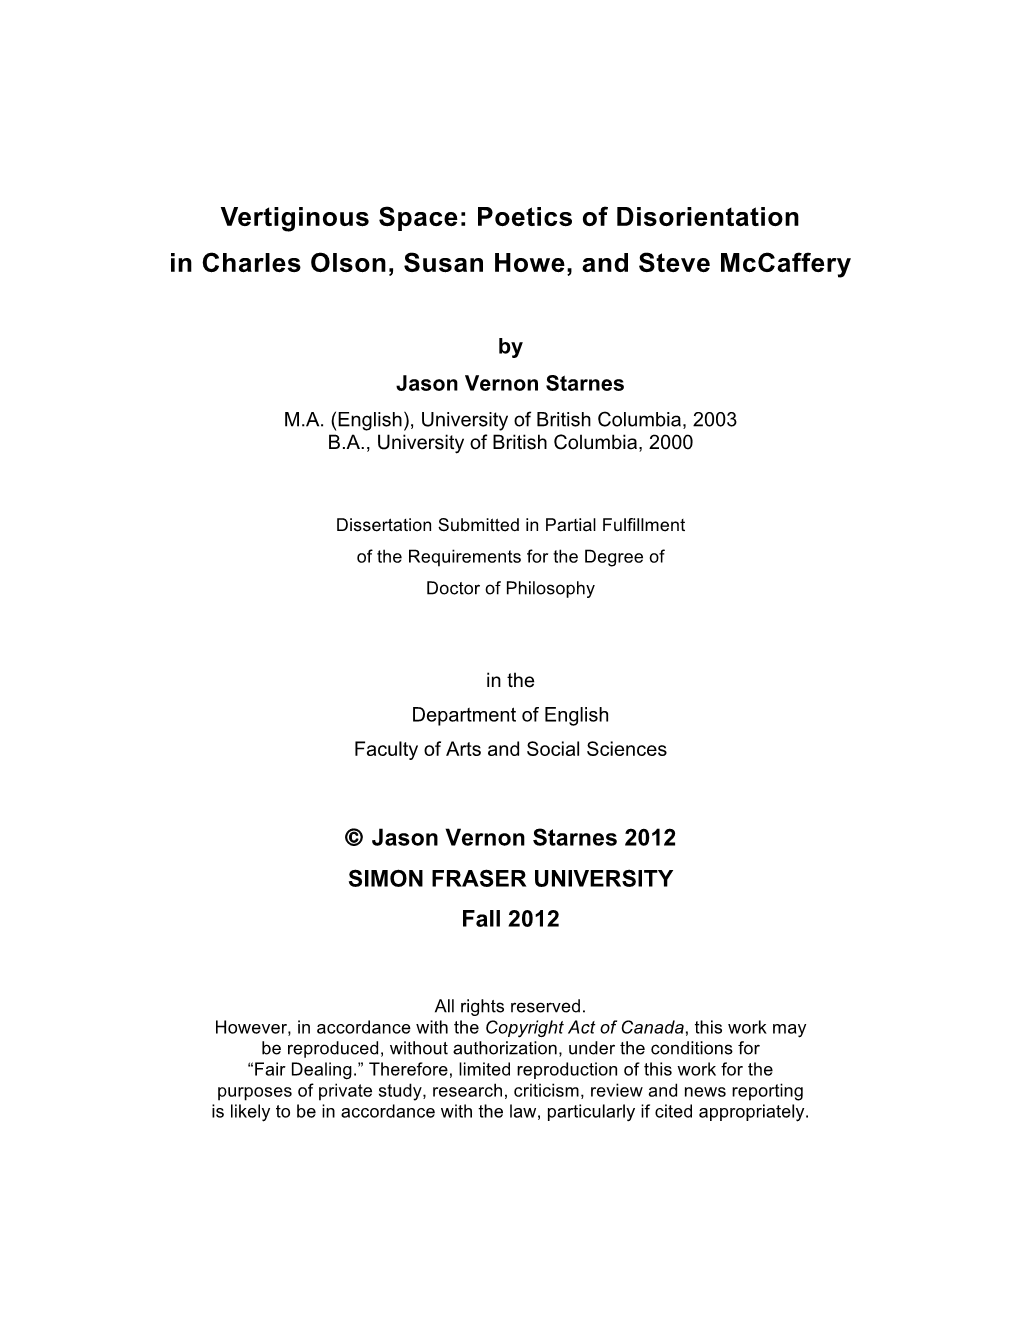 Vertiginous Space: Poetics of Disorientation in Charles Olson, Susan Howe, and Steve Mccaffery